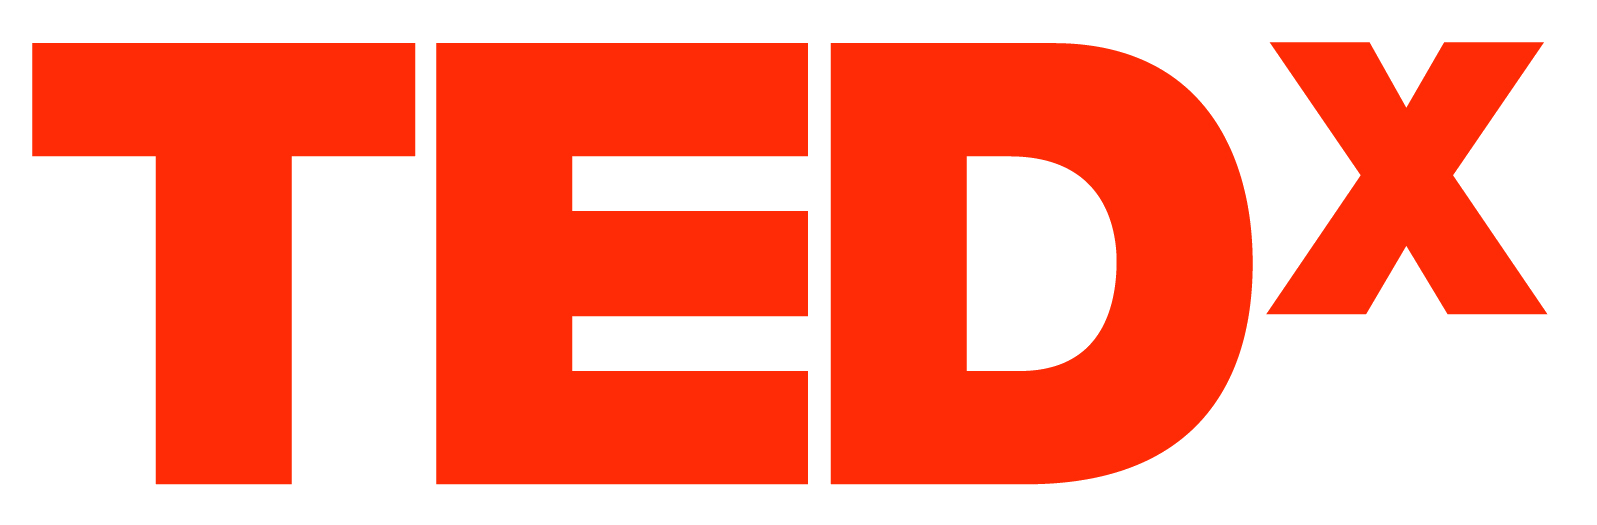 TEDx_logo1-transparent.png